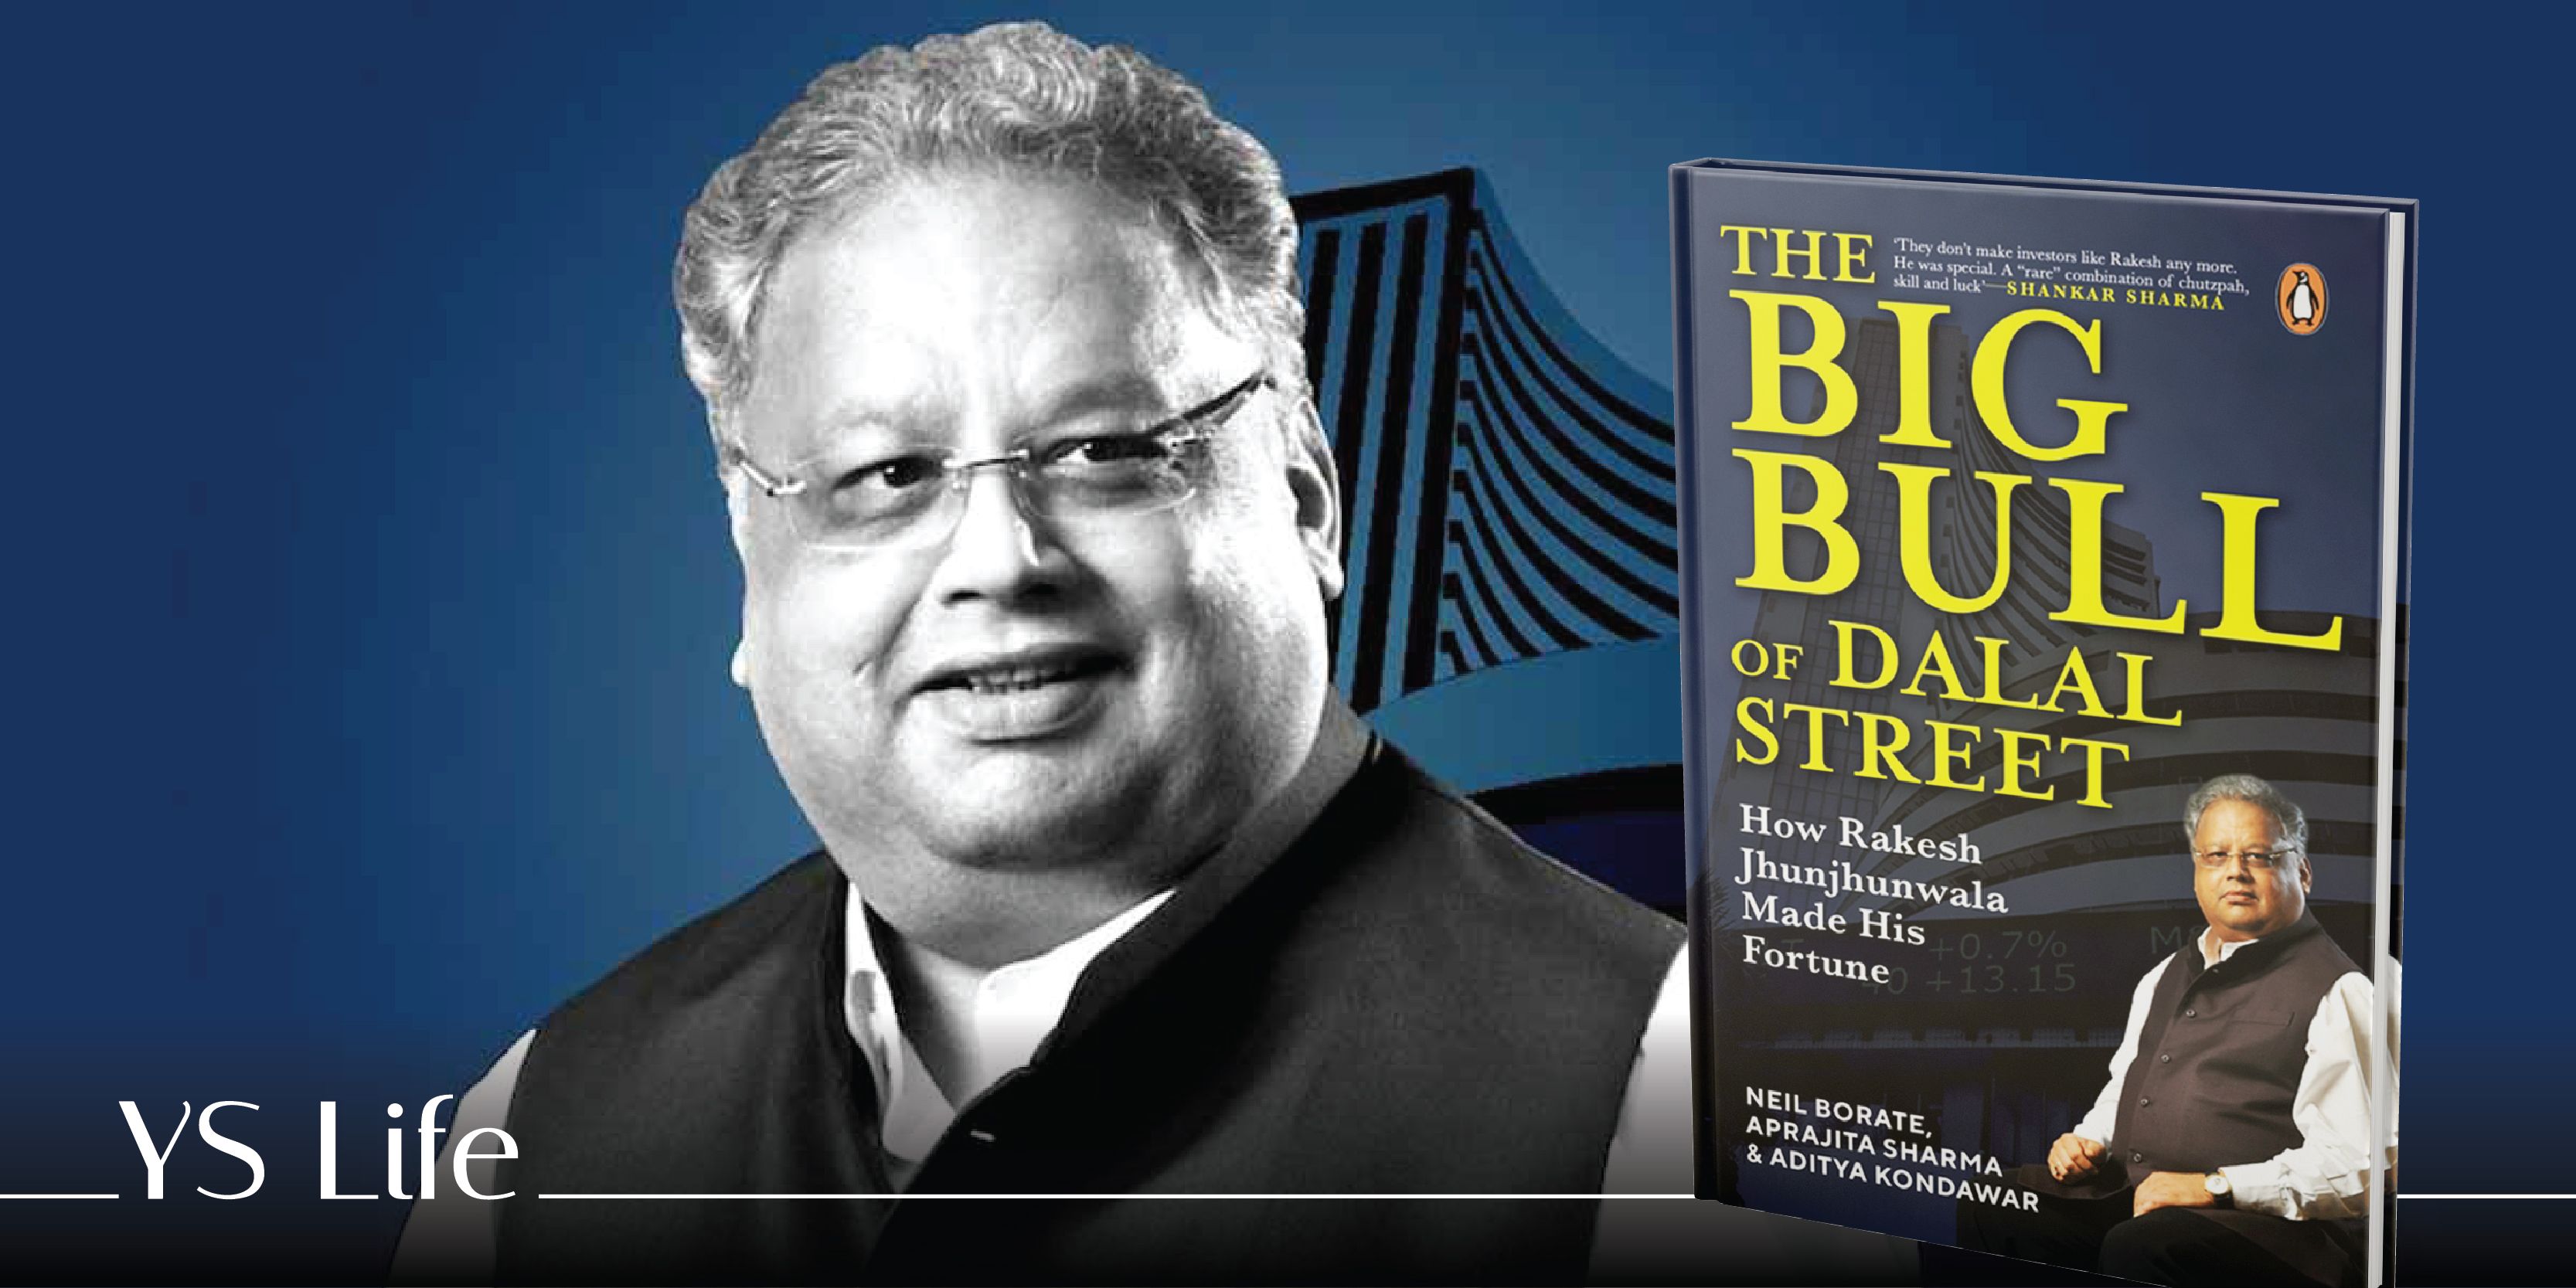 The Big Bull of Dalal Street: How Rakesh Jhunjhunwala made his fortune is a useful read for new investors 